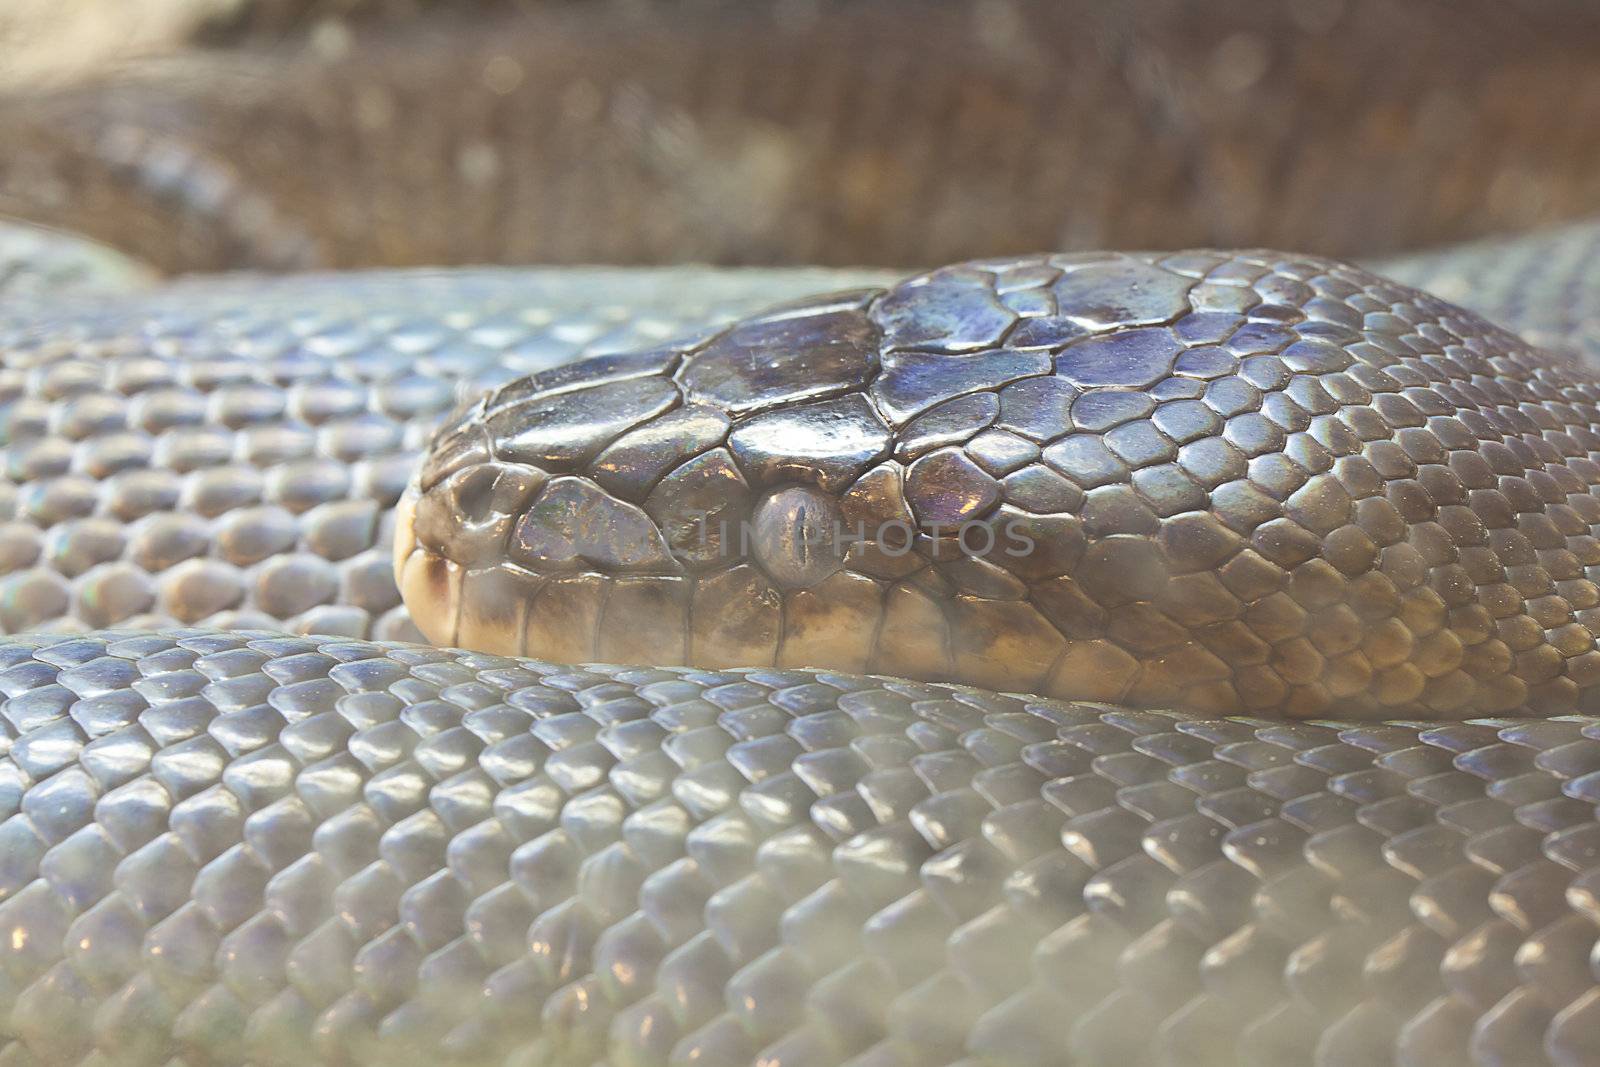 Snake, Macklot python, focus at eyes